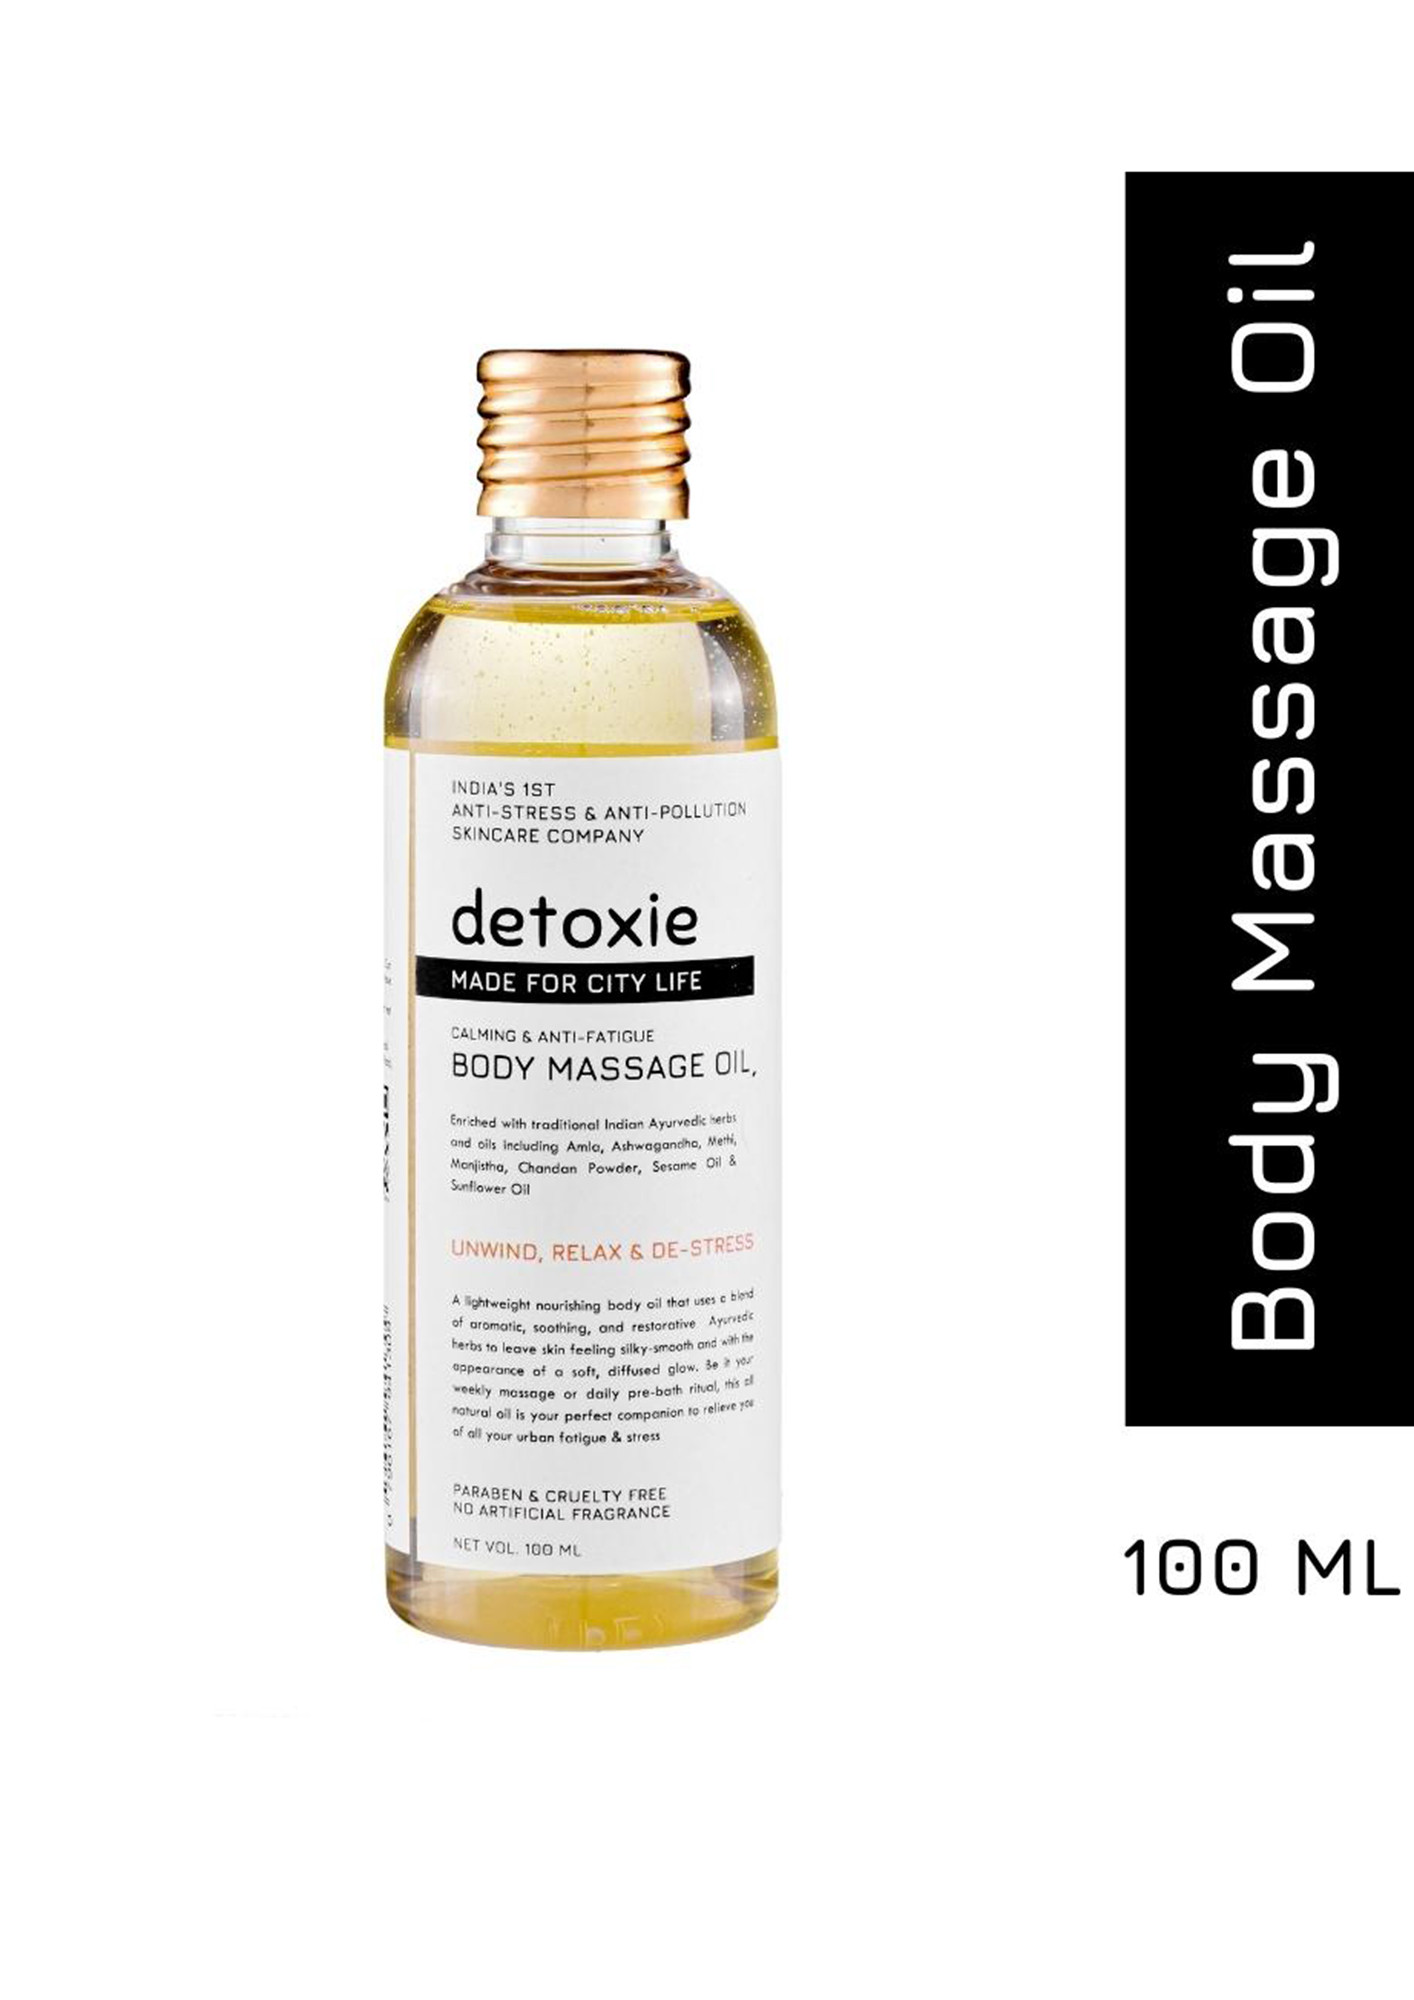 Detxoie - Calming & Anti-Fatigue Body Massage Oil - 100ml